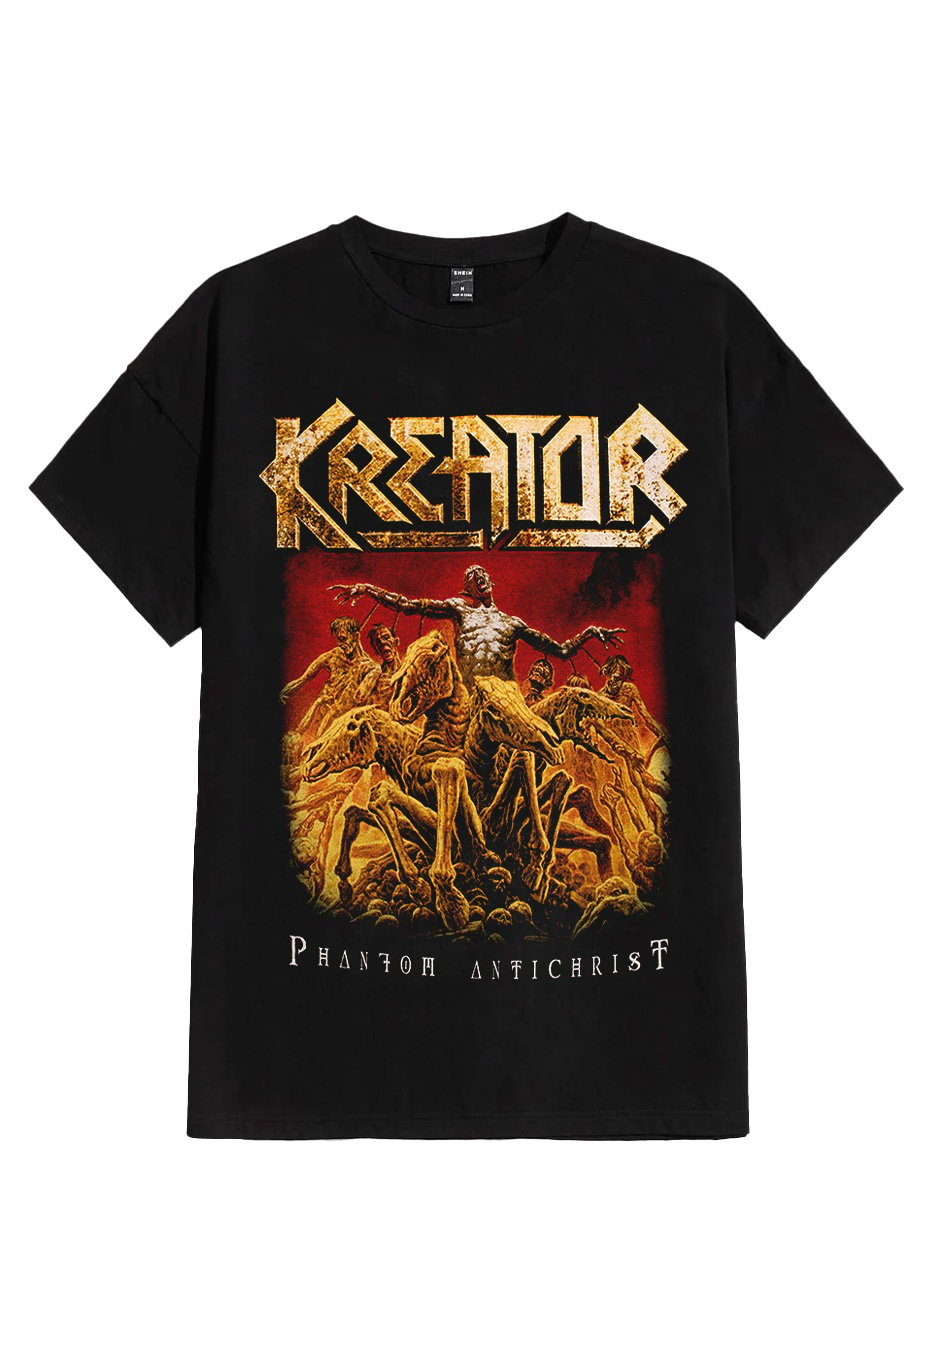 Kreator - Phantom Antichrist - T-Shirt